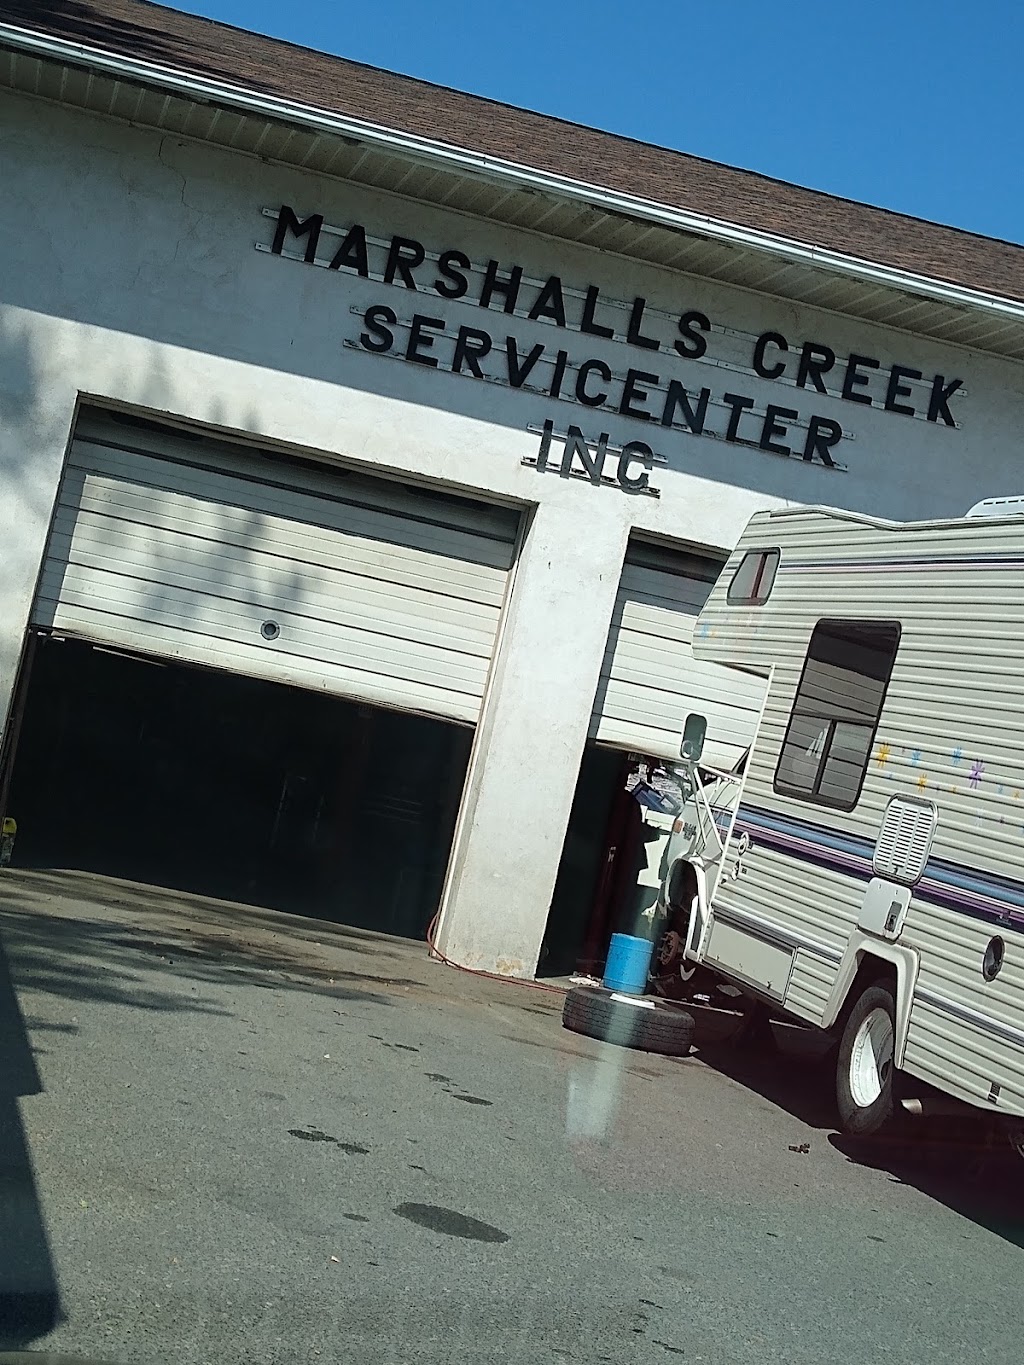 Scotts Marshalls Creek Service Center | 320 Dartmouth Dr, Marshalls Creek, PA 18335 | Phone: (570) 223-8220